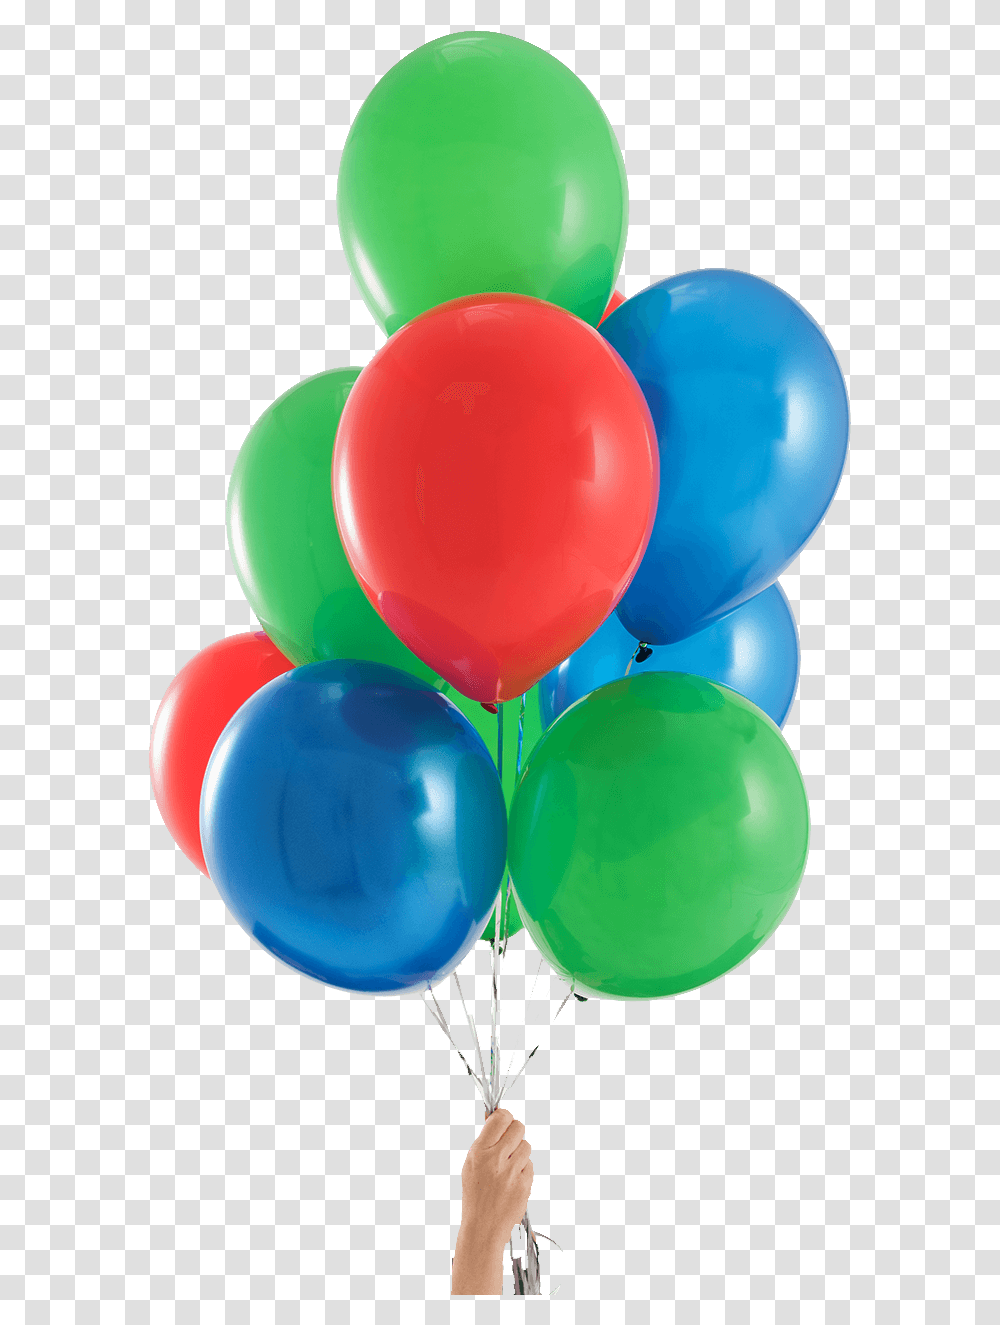 Pj Mask Party Balloons Pj Masks Balloons Transparent Png